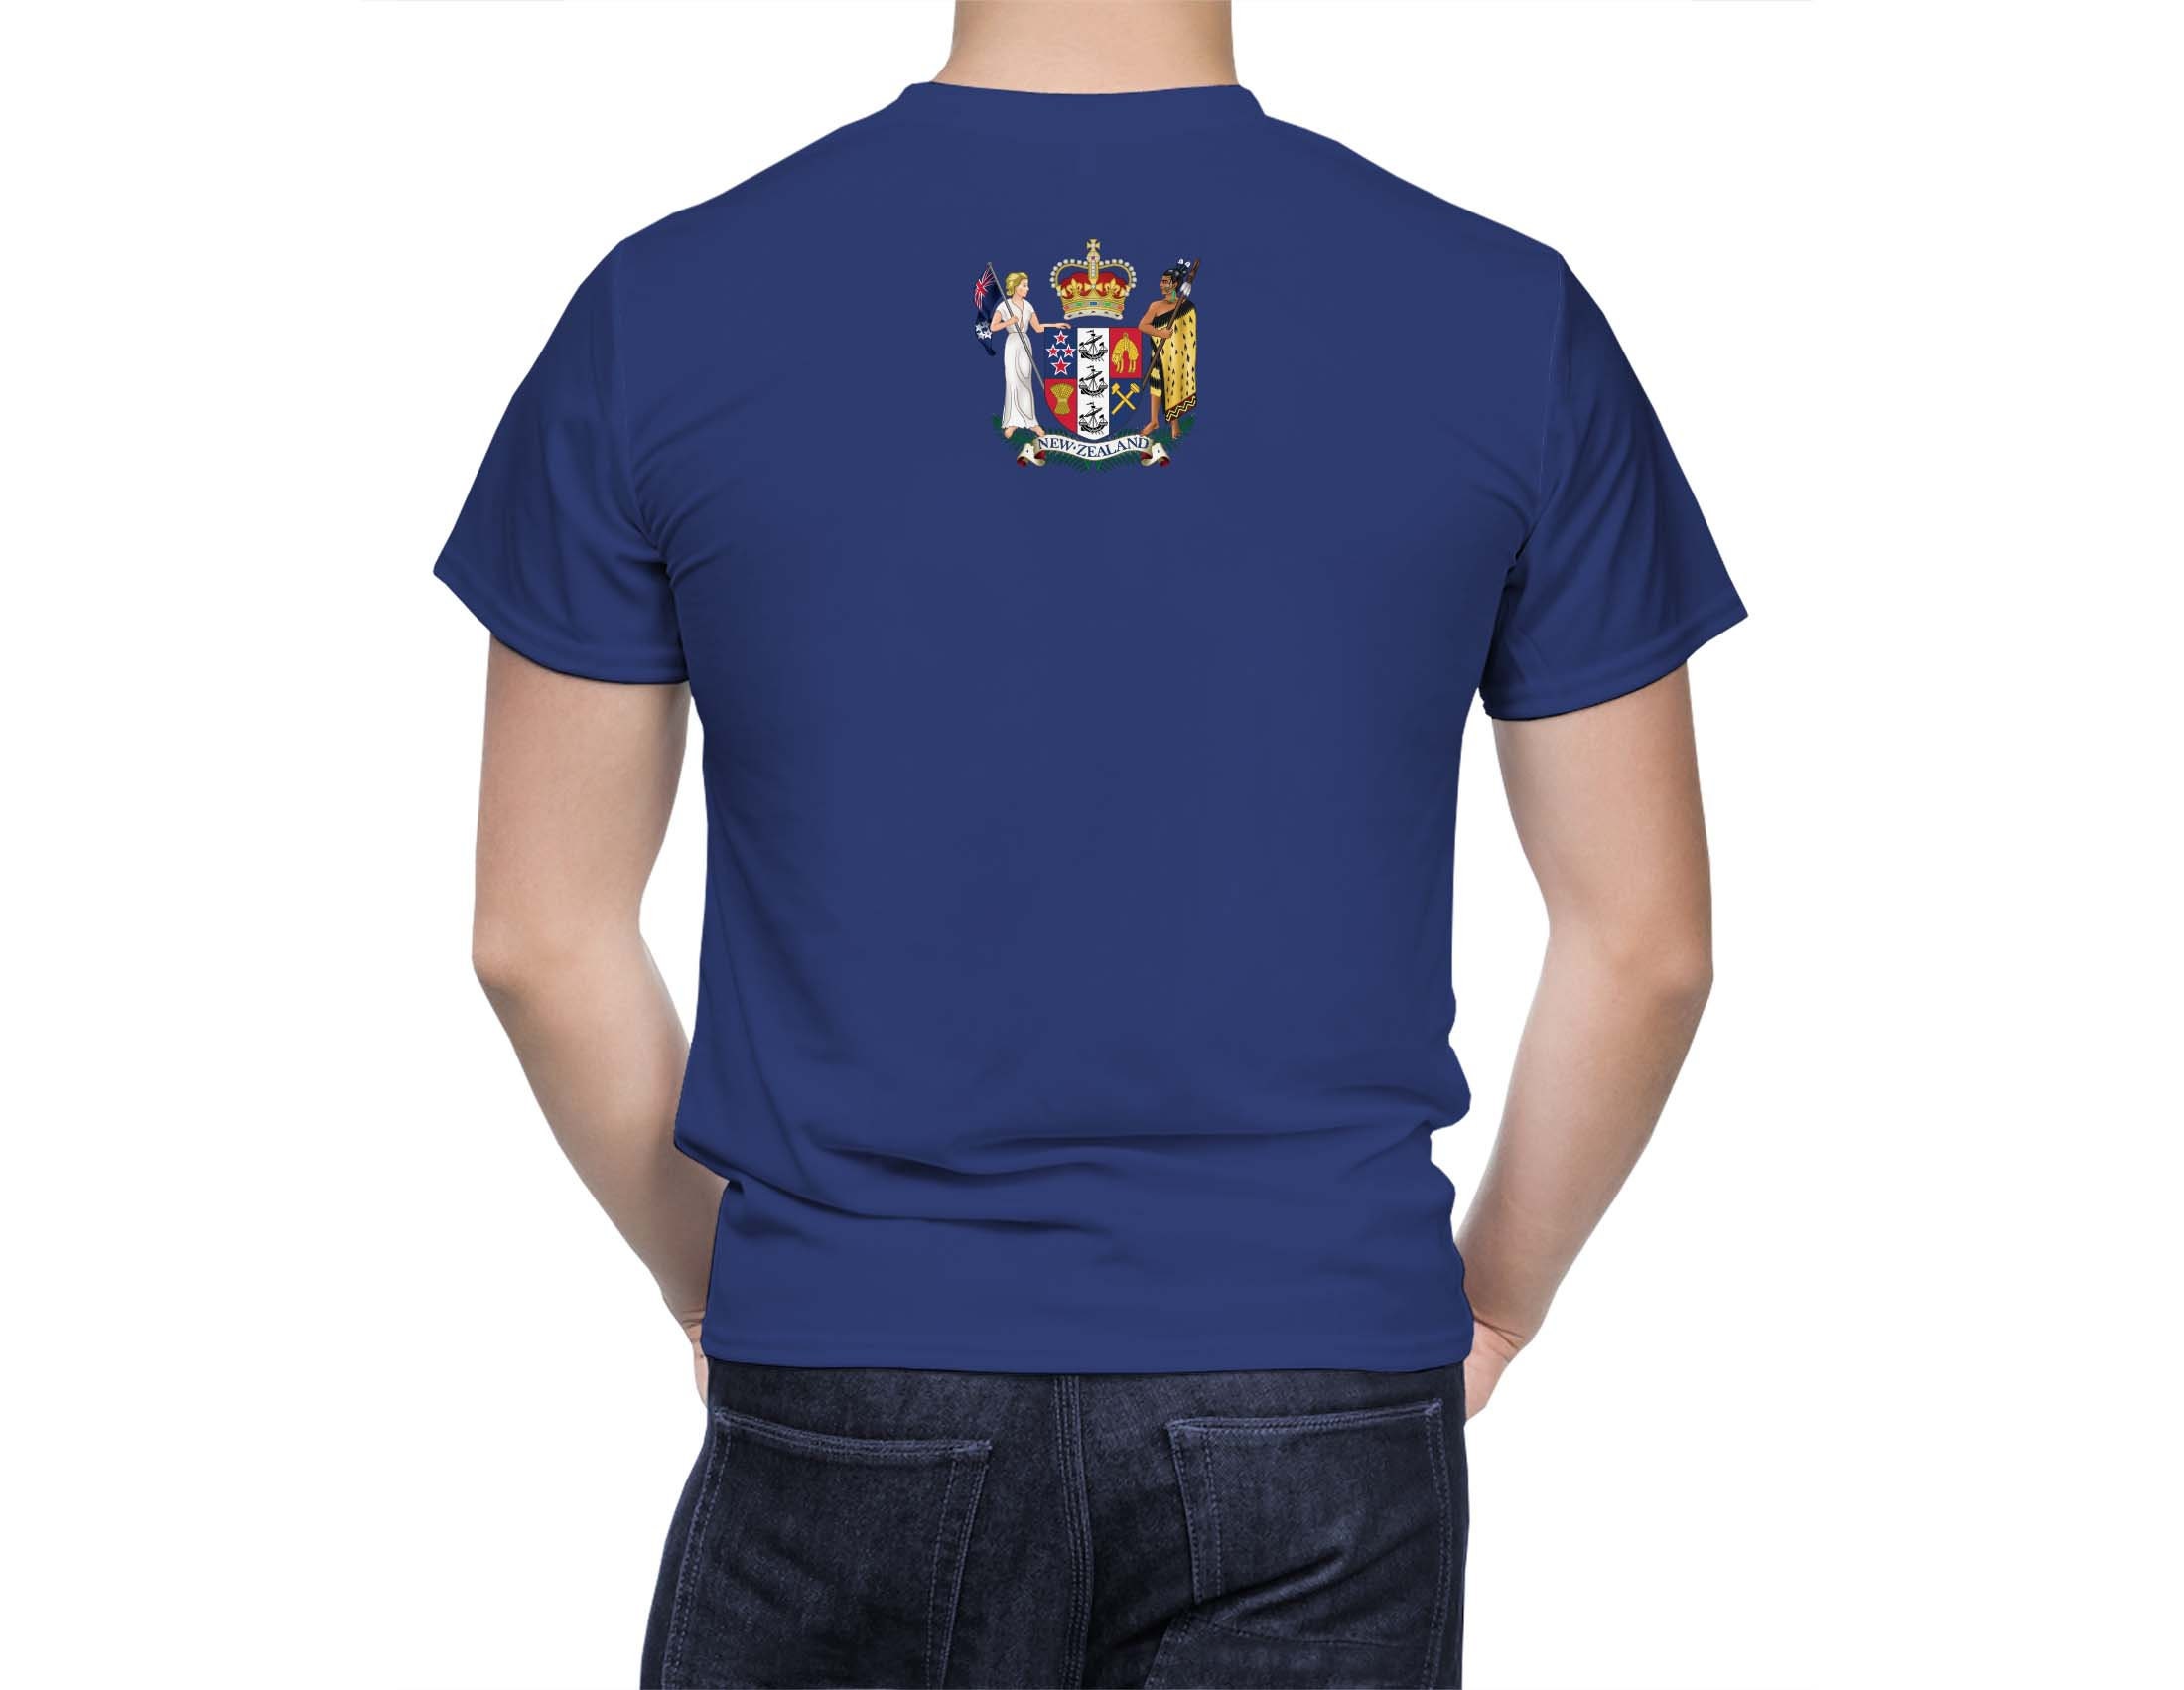 Discover New Zealand Flag Shirt, Patriotic 3D T-Shirt